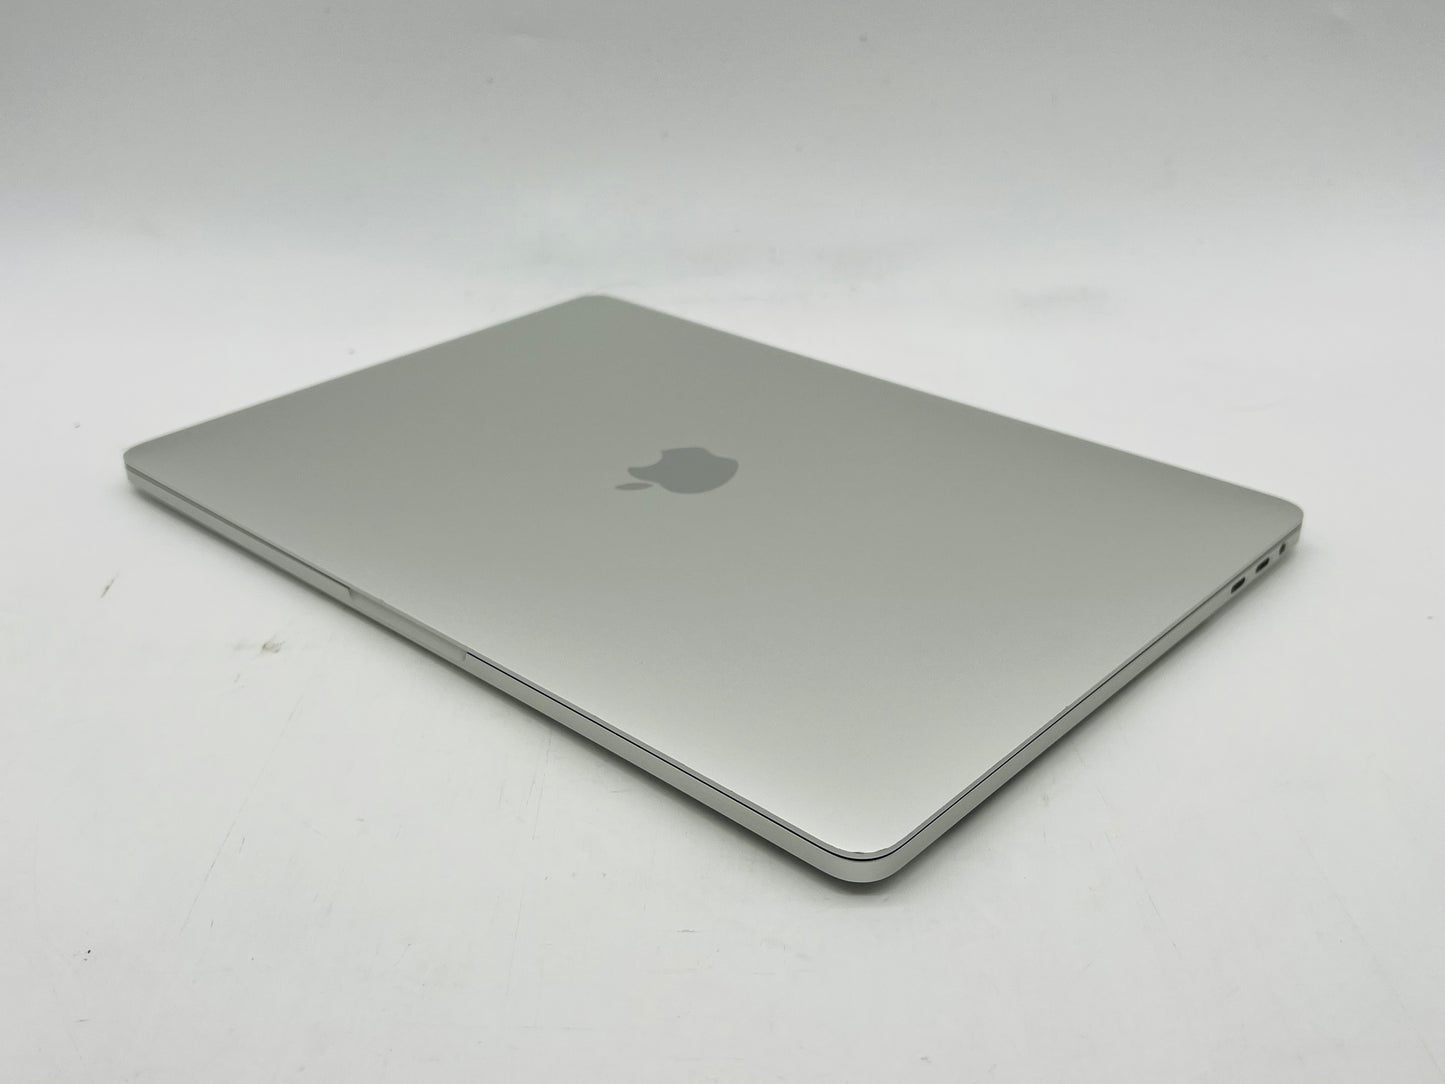 Apple 2019 MacBook Pro 13 in TB 2.4GHz i5 16GB RAM 512GB SSD IIPG655 - Very Good